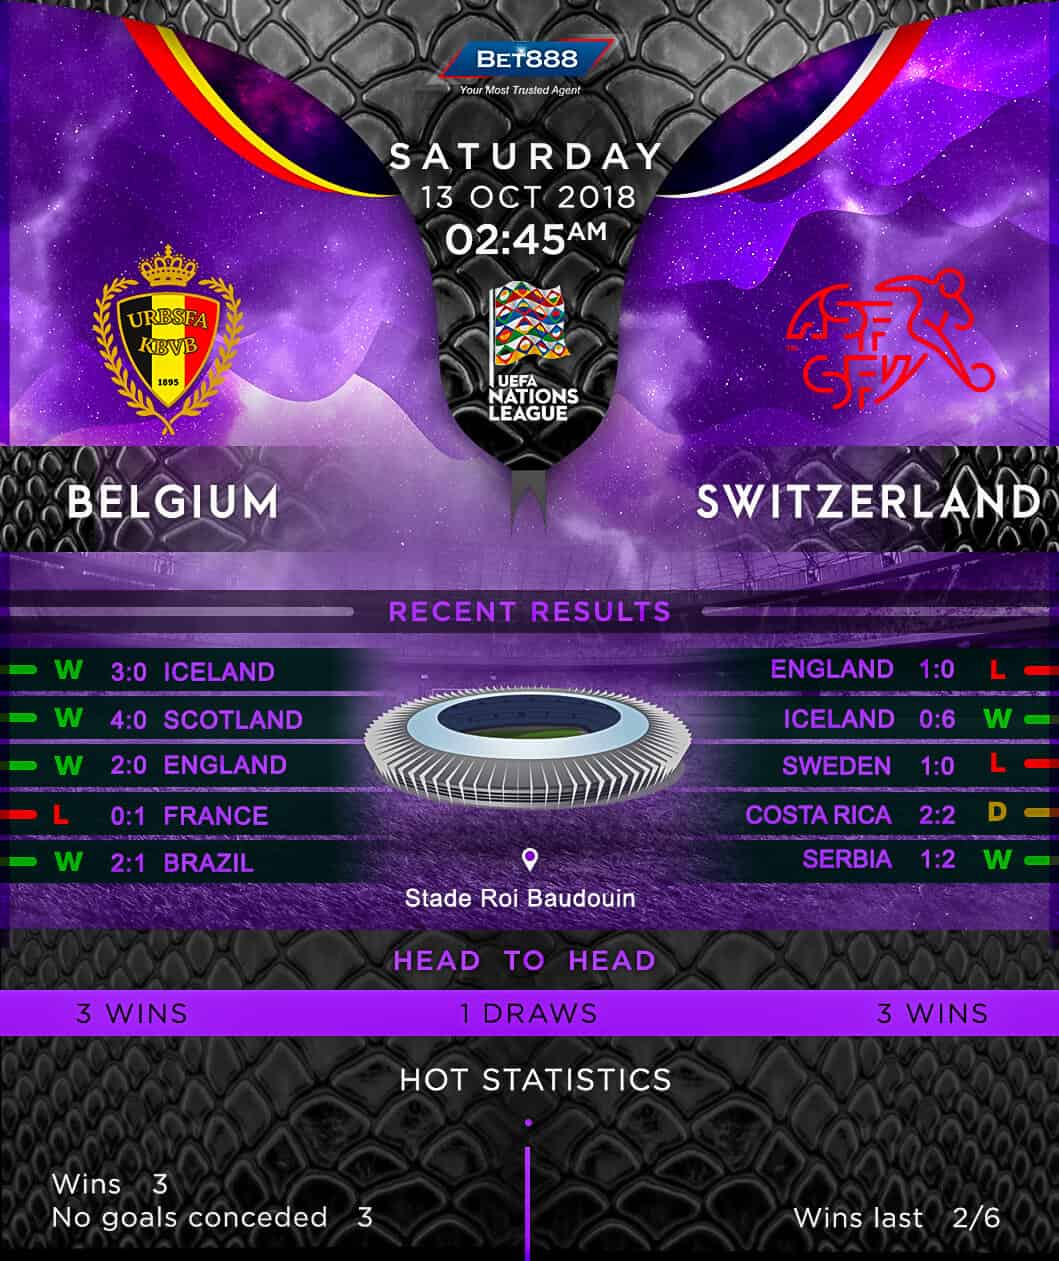 Belgium vs Switzerland 13/10/18